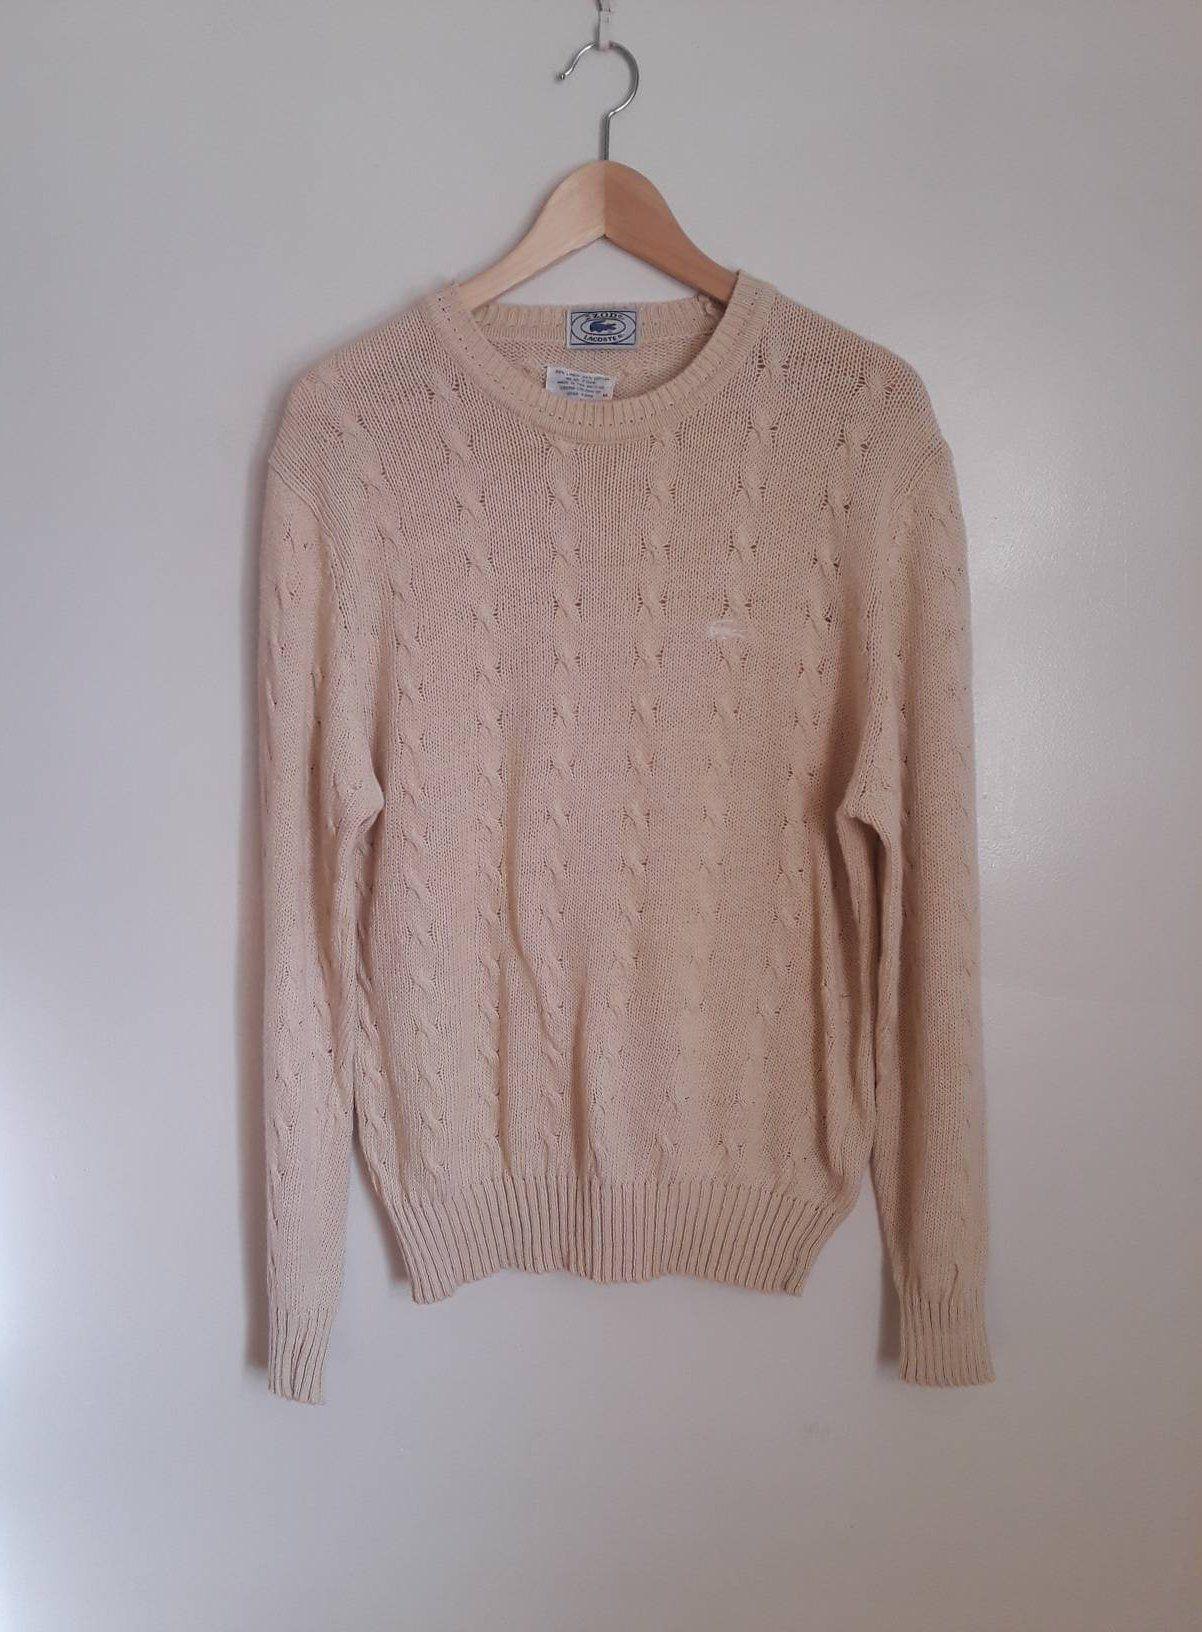 1980s Izod Logo - Vintage 1980's Izod Lacoste Cream Cotton Linen Cable Knit Sweater